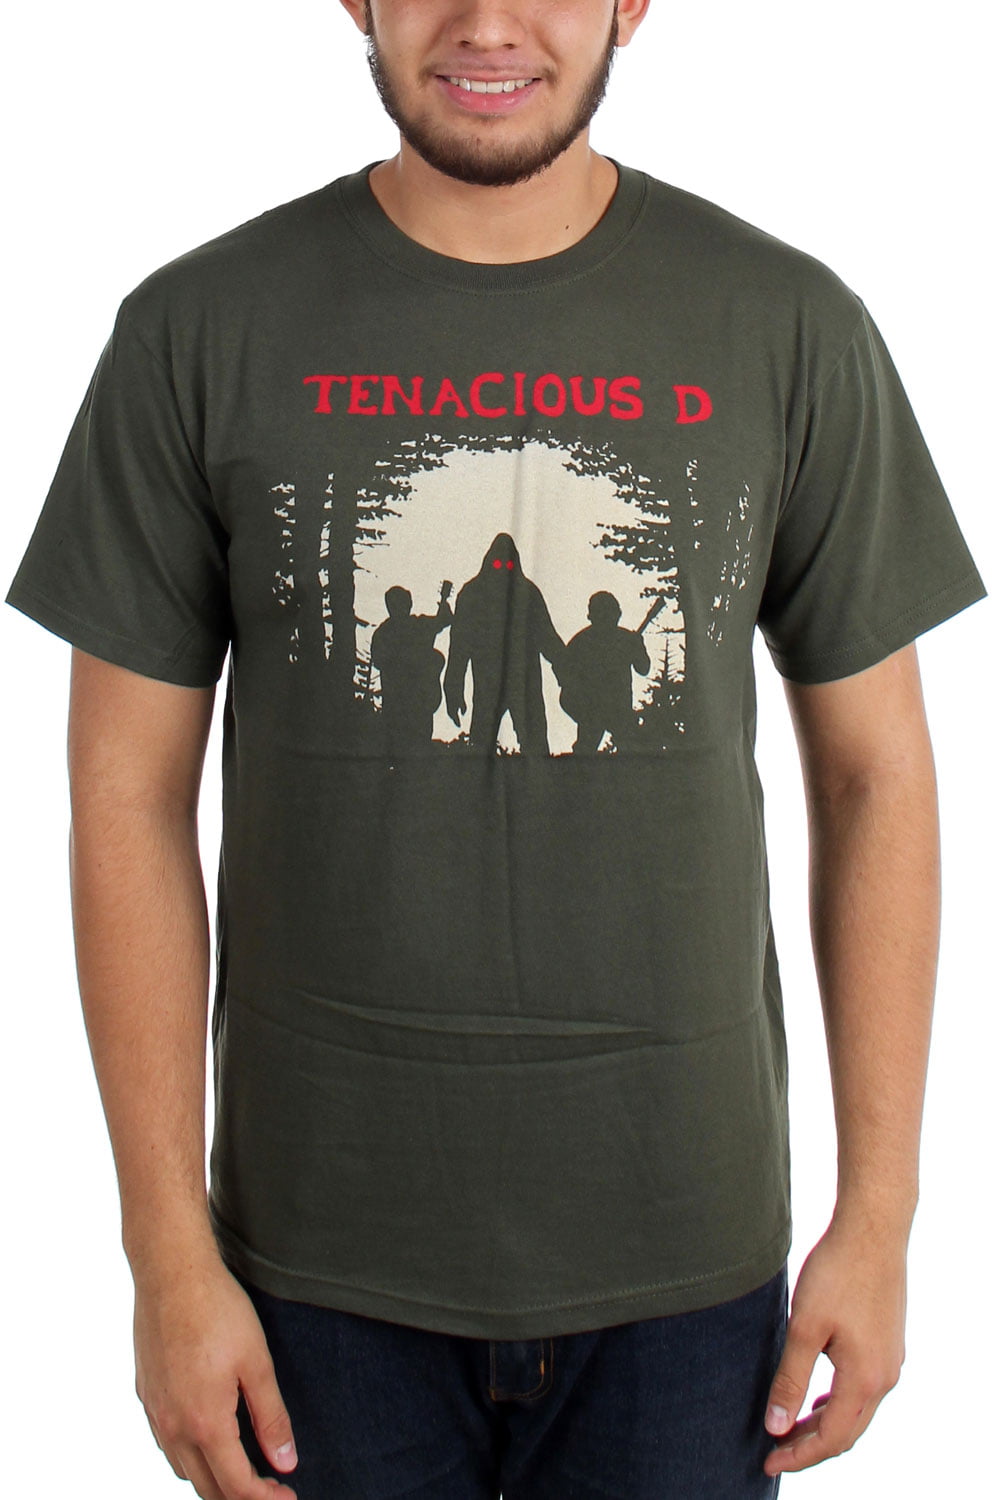 TENACIOUS D Album Cover T Shirt Vintage Gift For Men Women Funny Tee